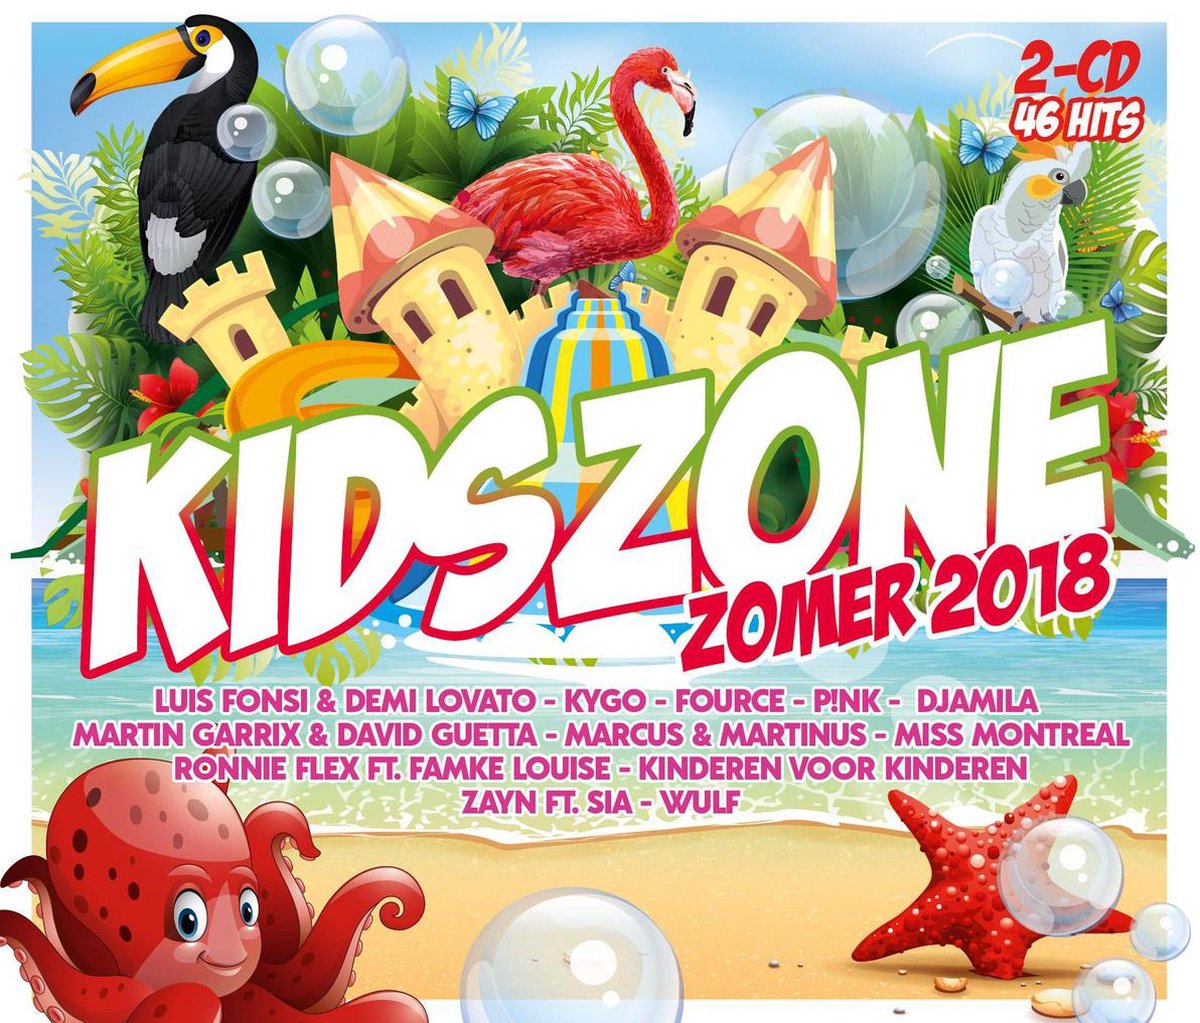 Kidszone Zomer 2018 - Kidszone